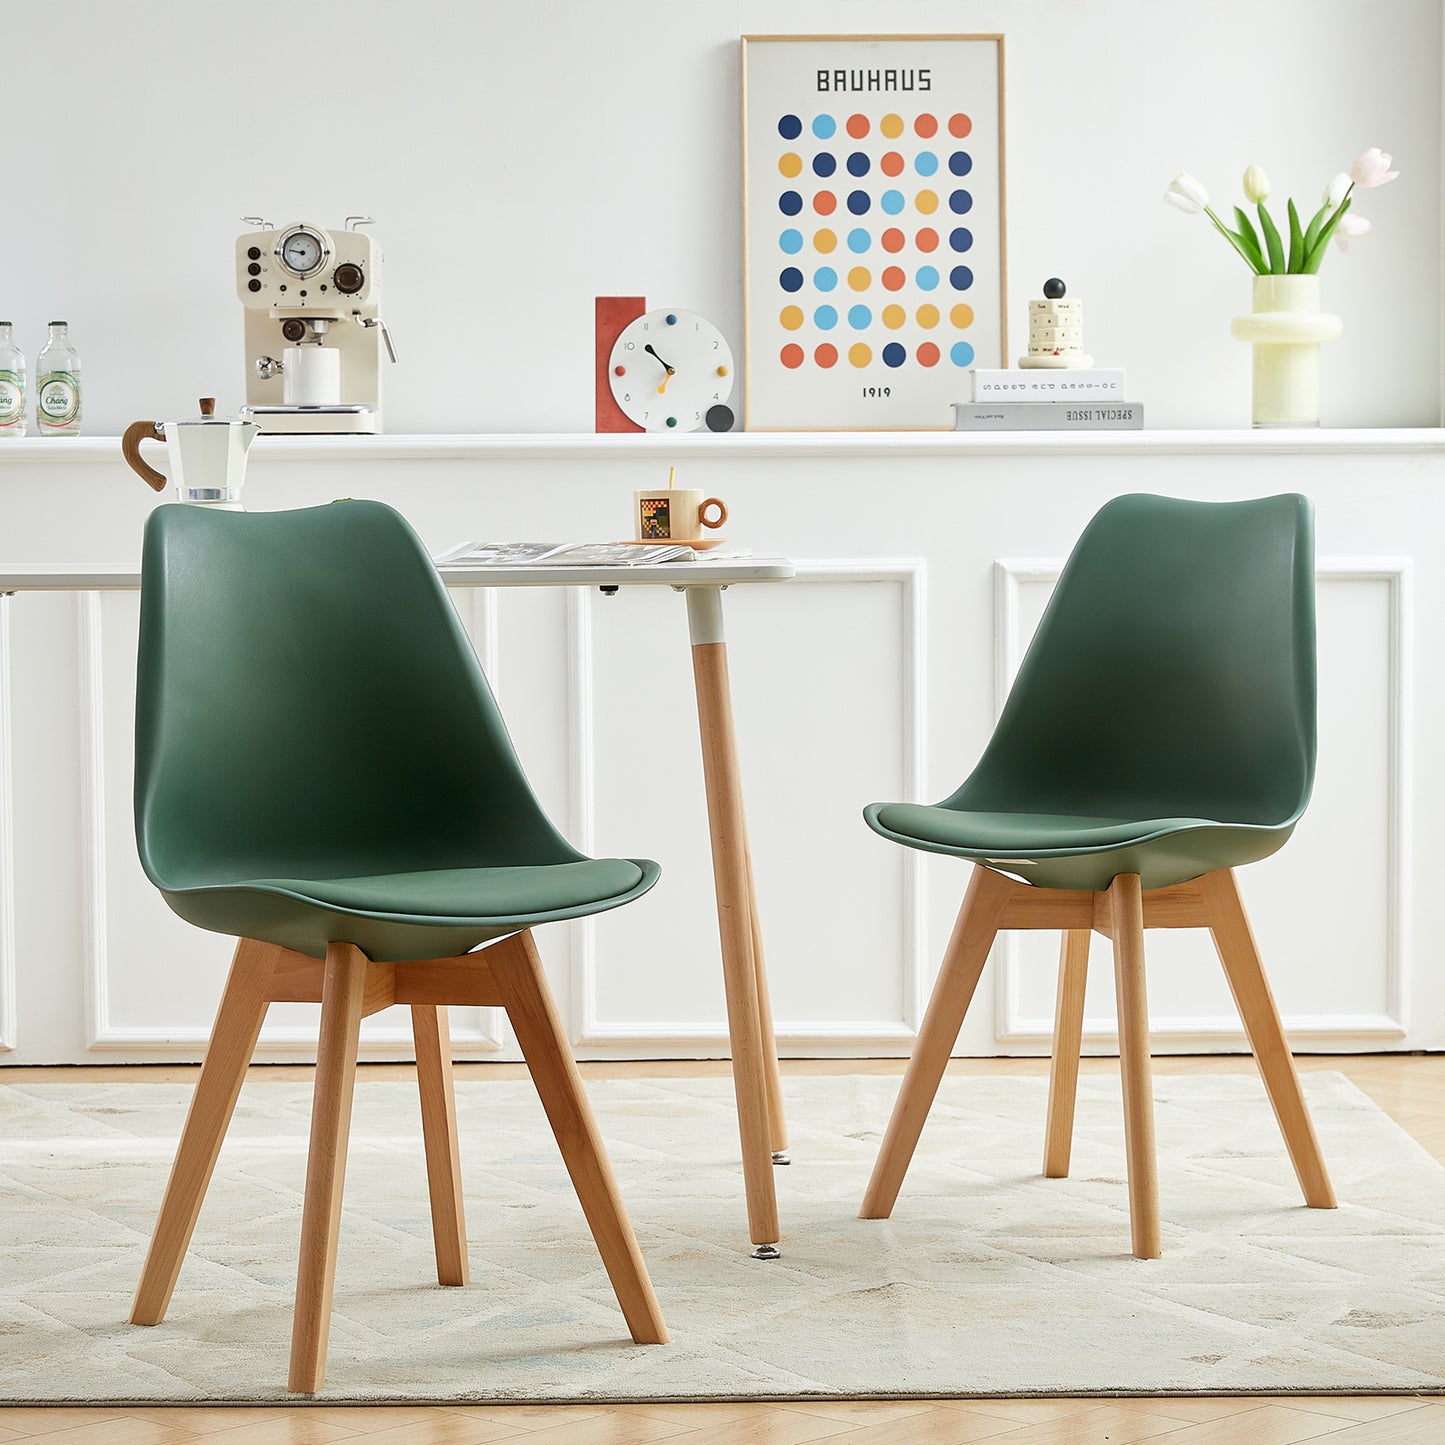 1× chaise de salle à manger design contemporain scandinave - Vert